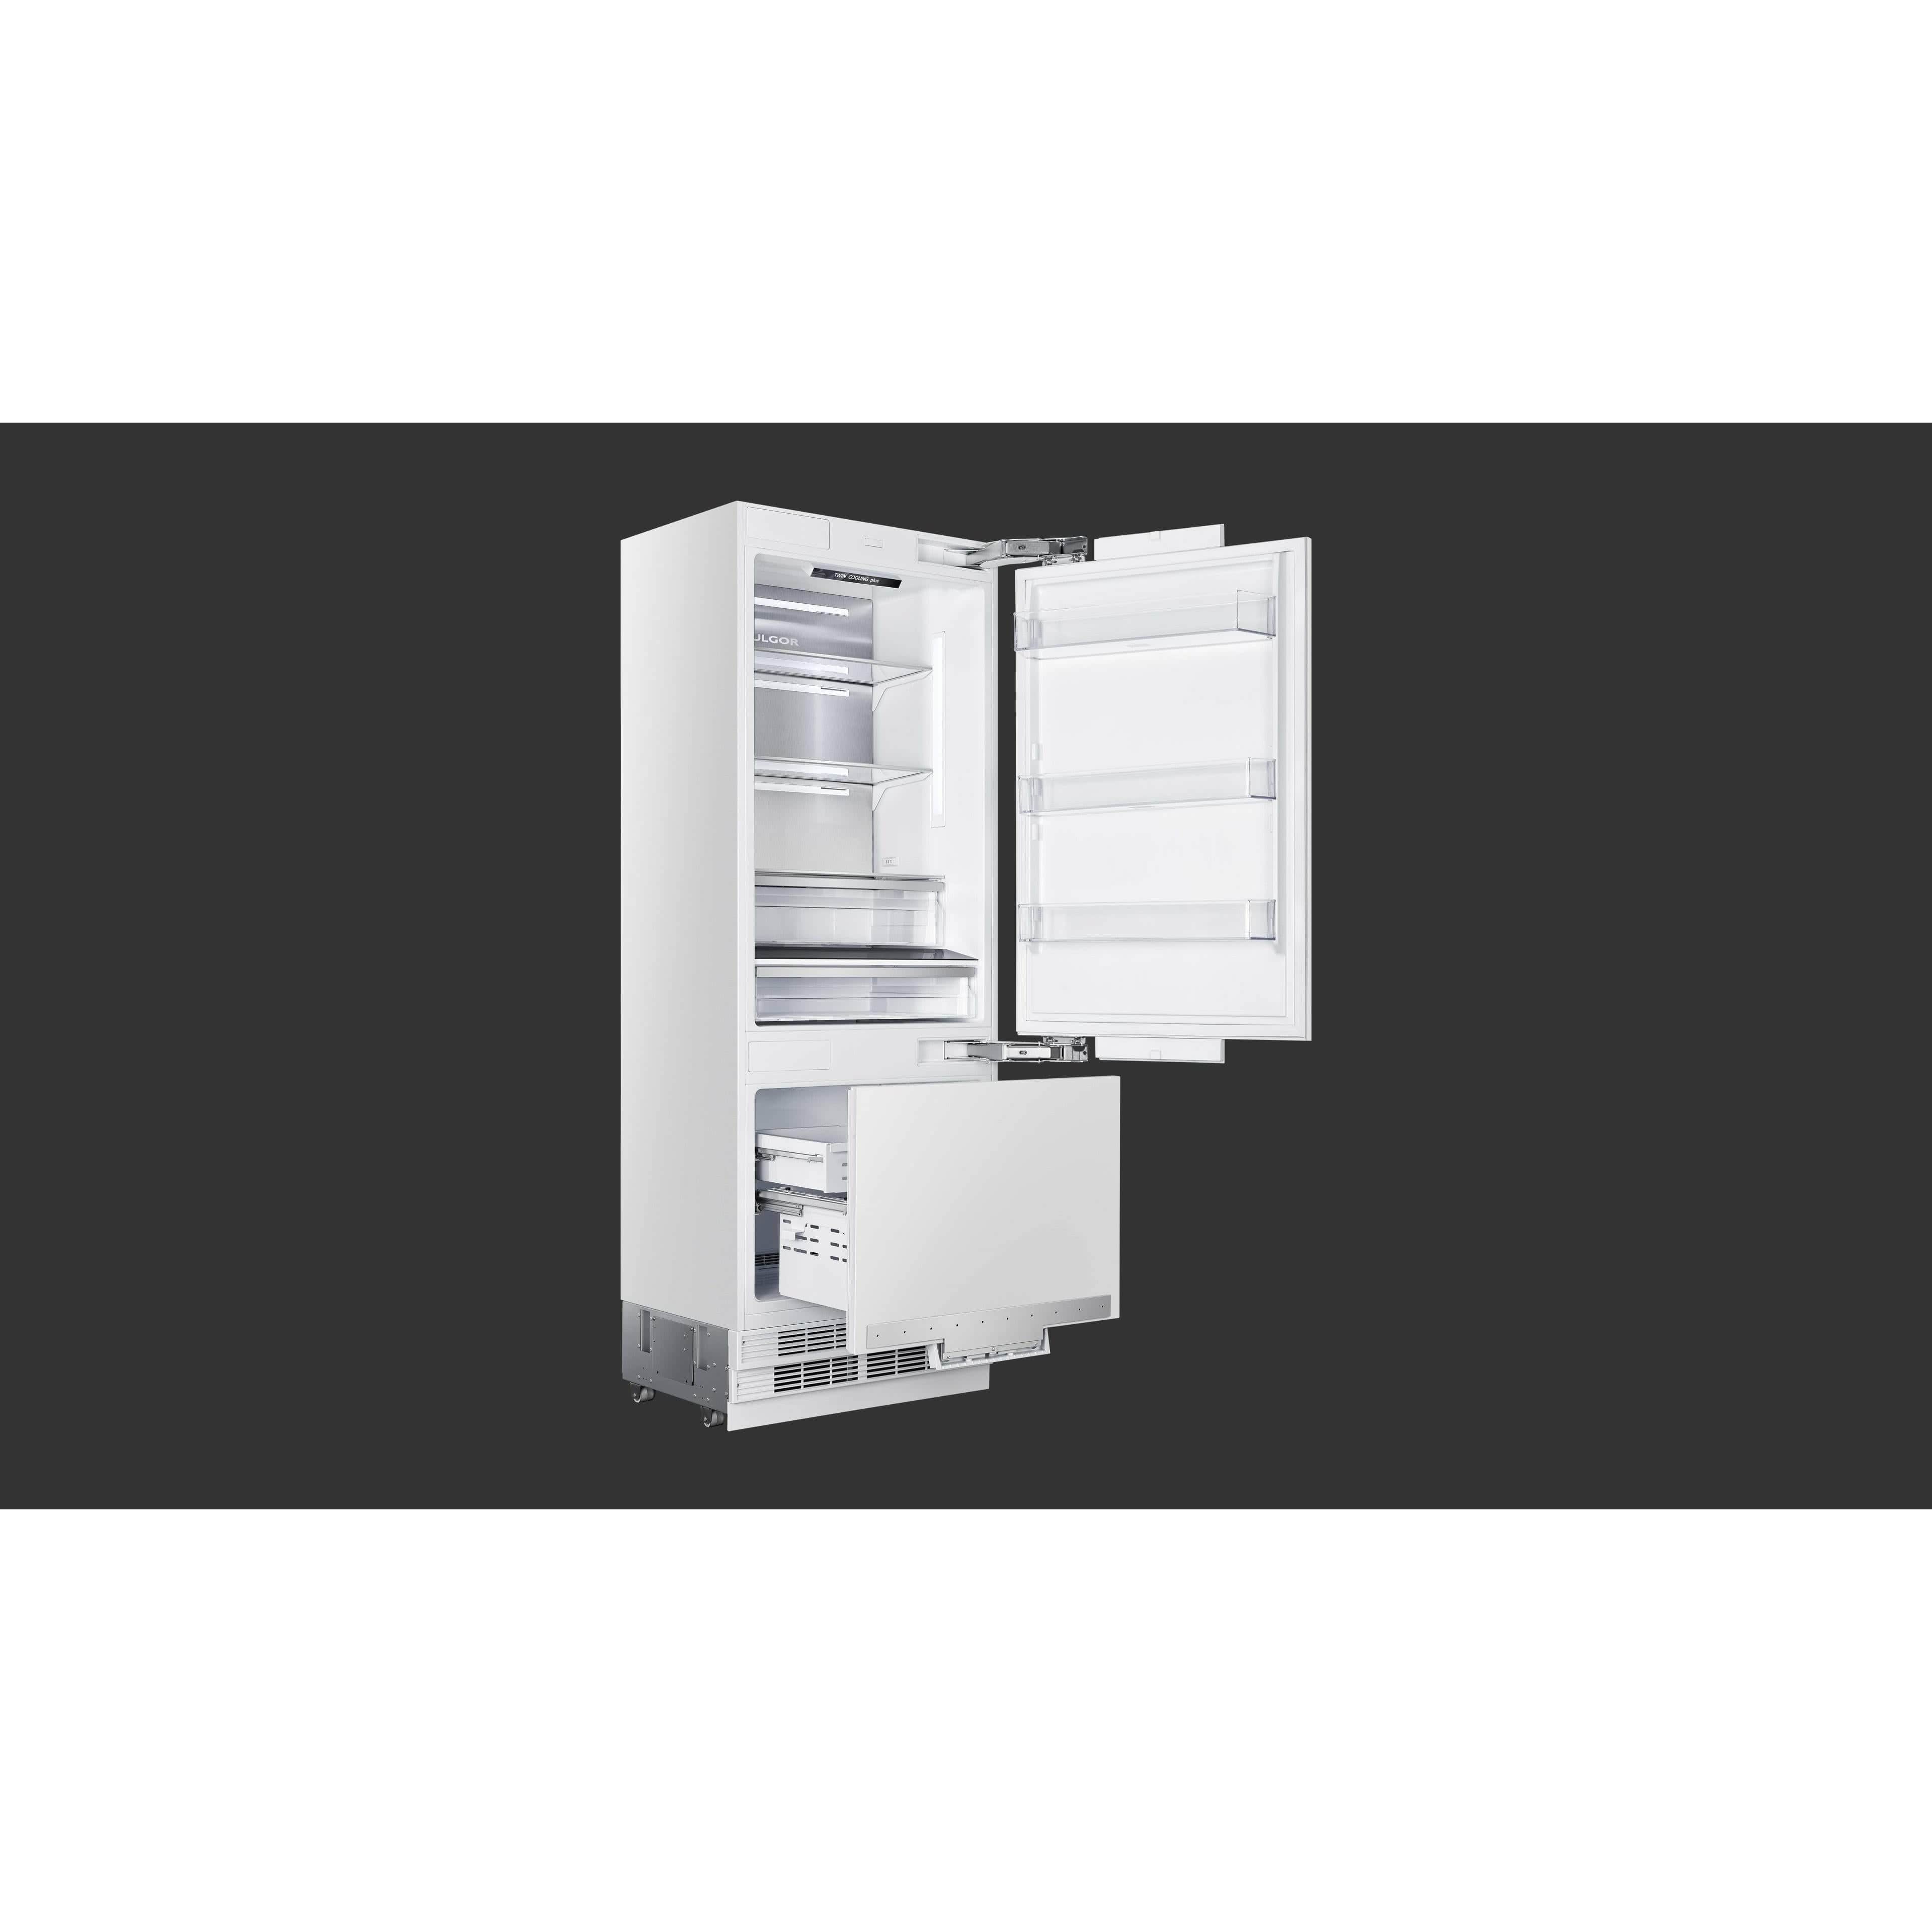 Fulgor Milano 30" Built-In Panel Ready Bottom Mount Refrigerator with 16.0 cu.ft. Capacity - FM4BM30FBI Refrigerators FM4BM30FBI Luxury Appliances Direct